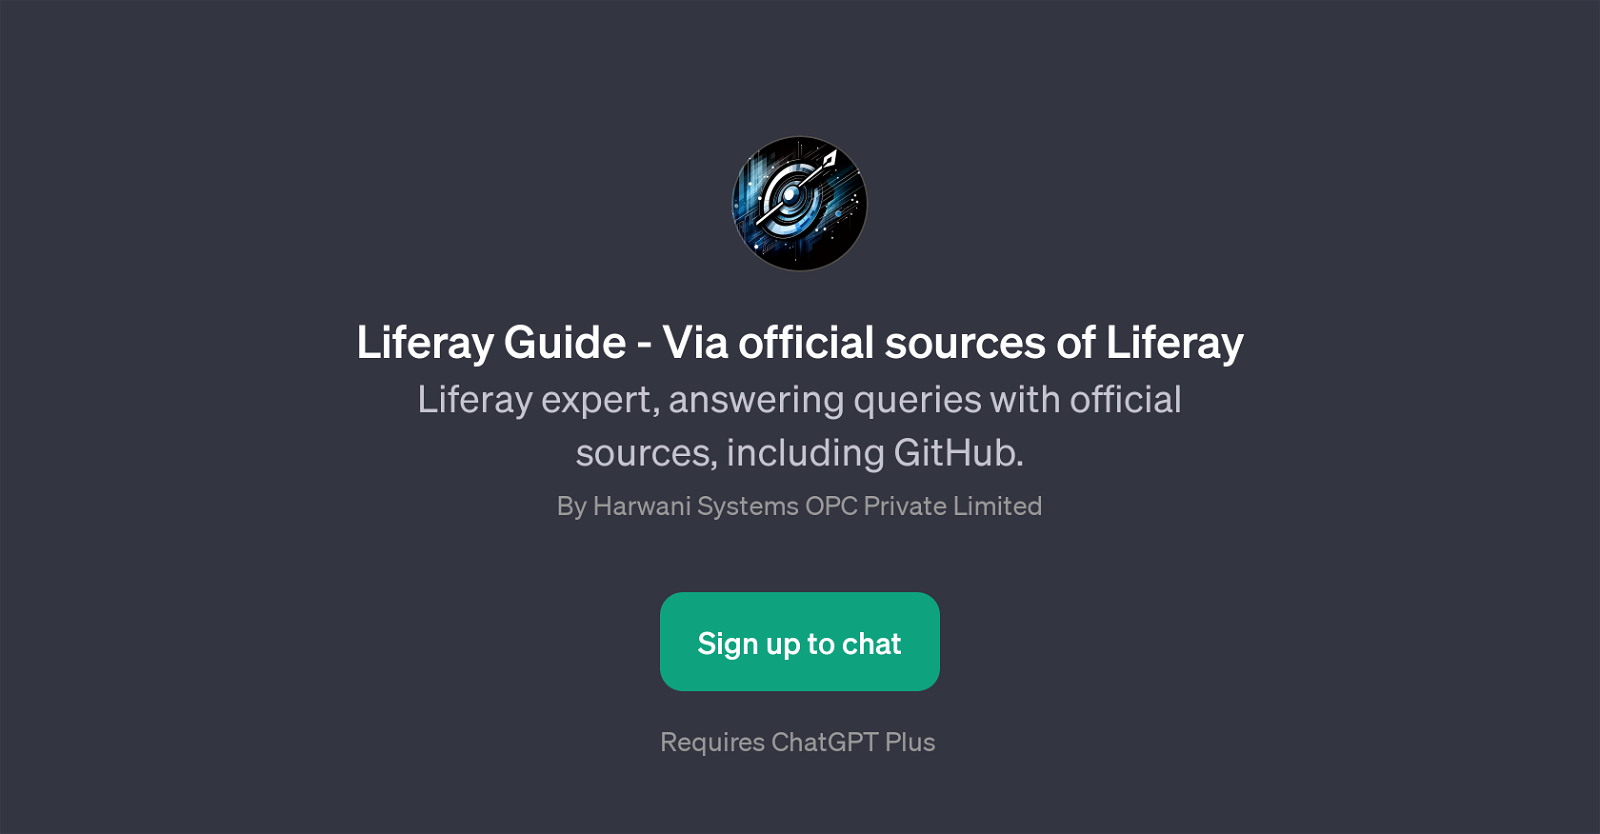 Liferay Guide website